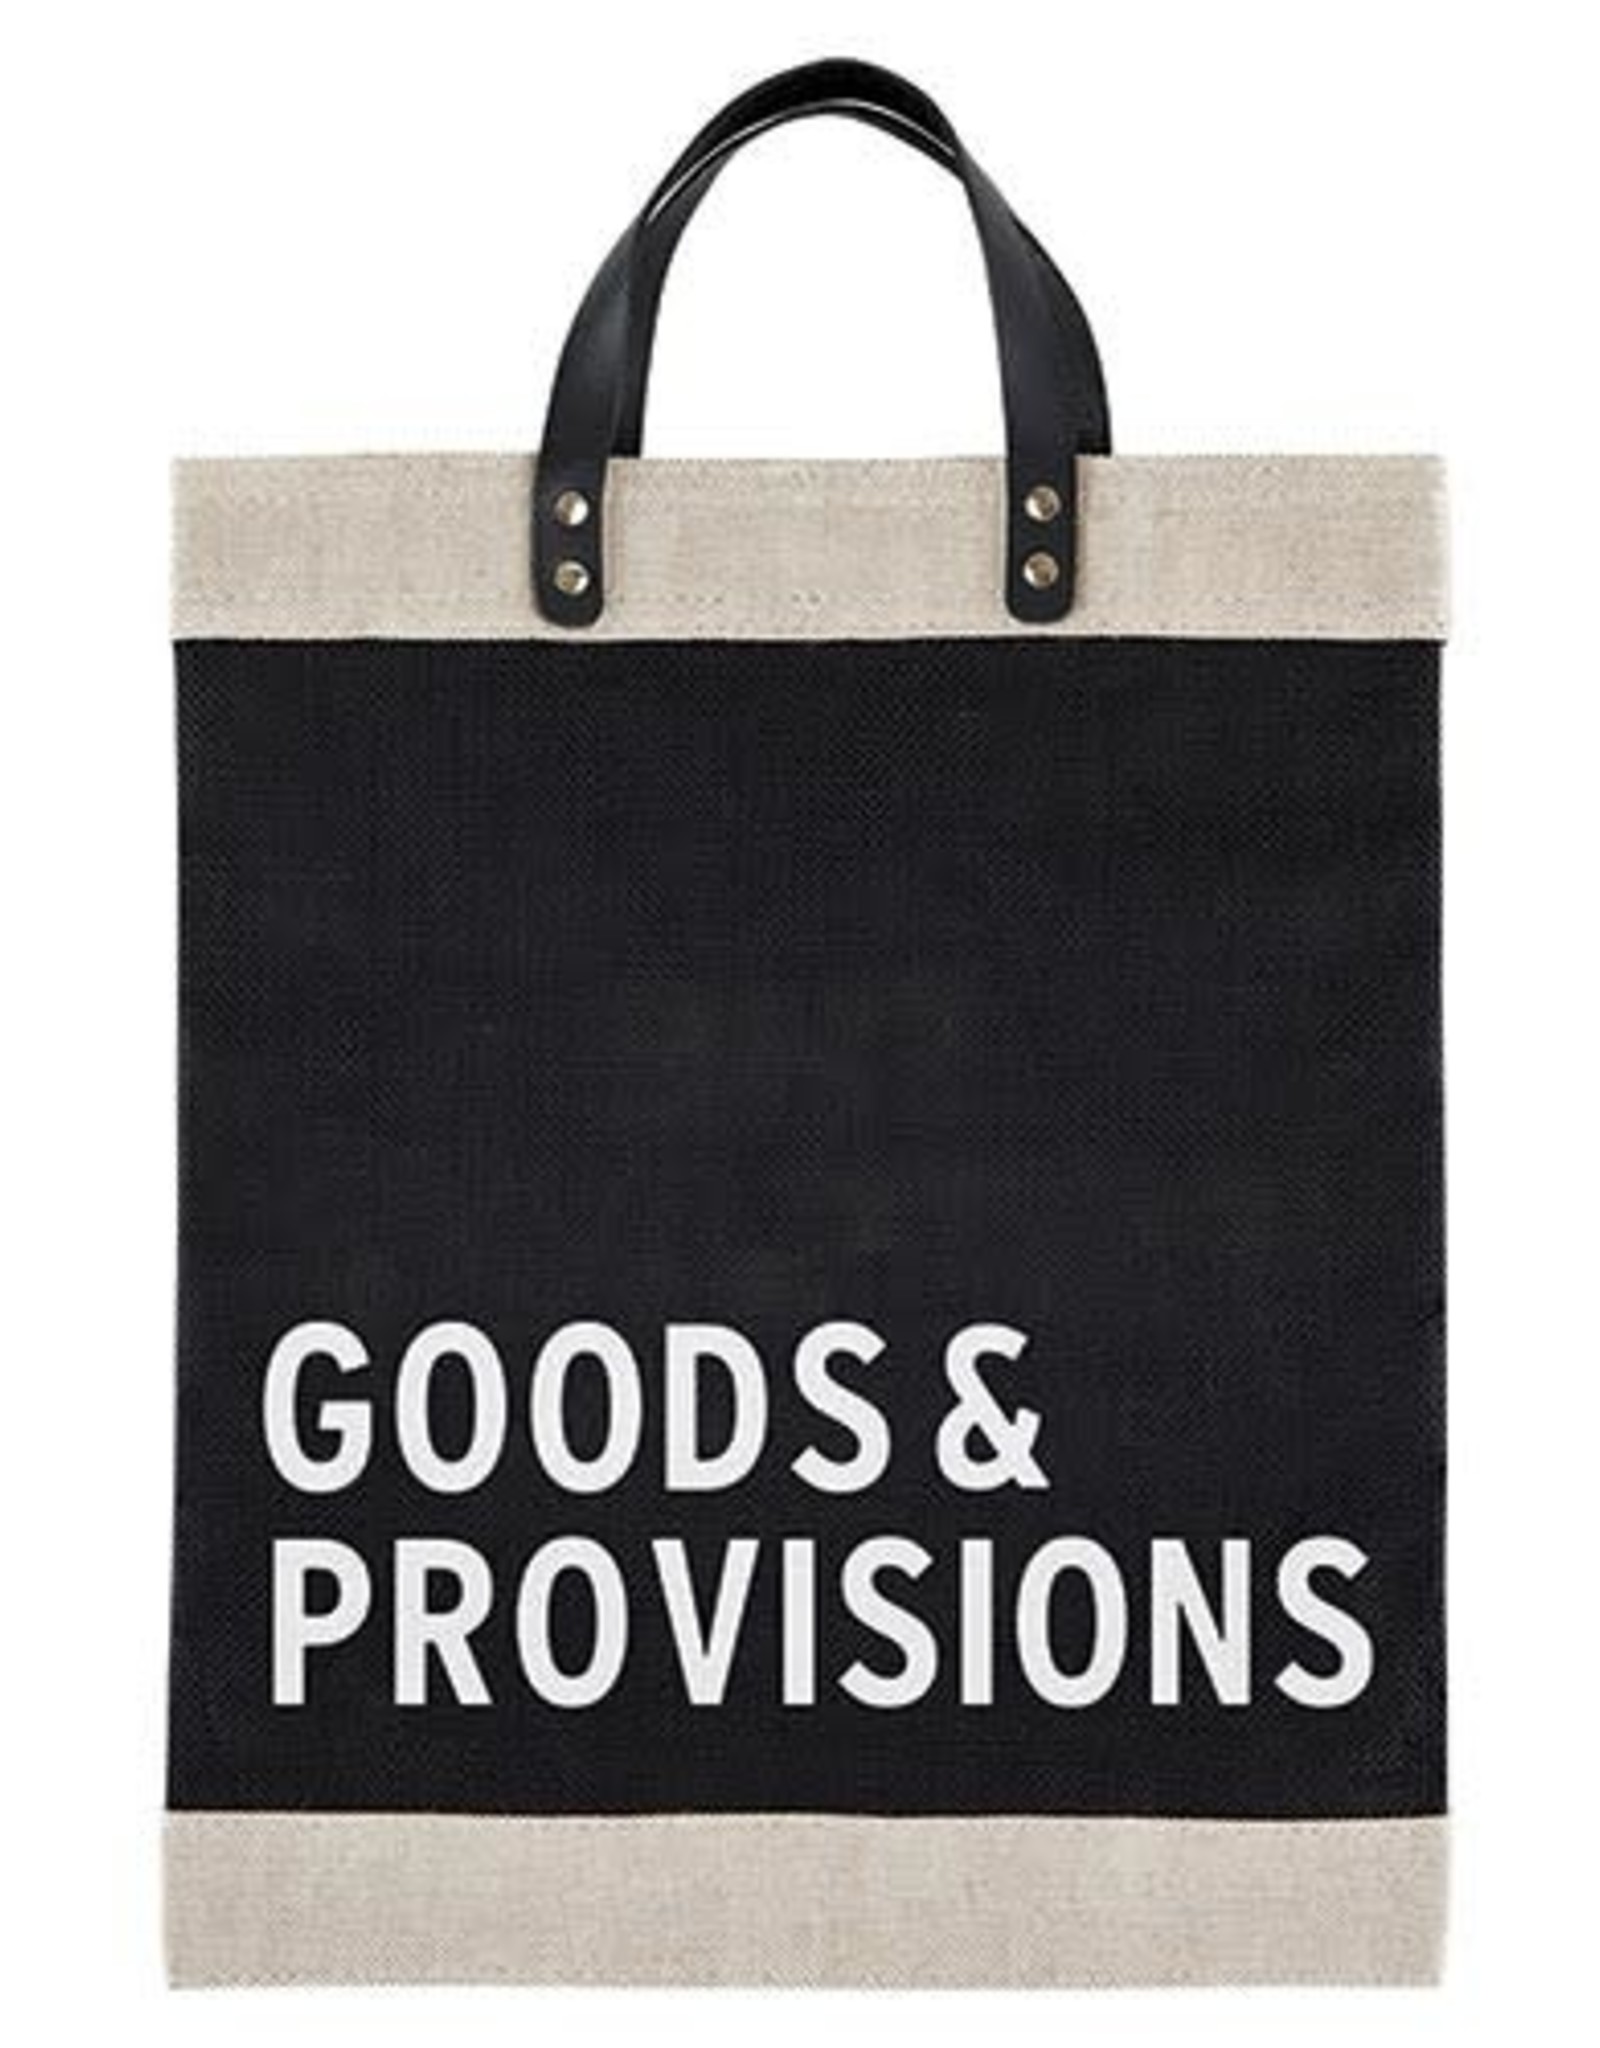 Goods & Provisions Black Market Tote